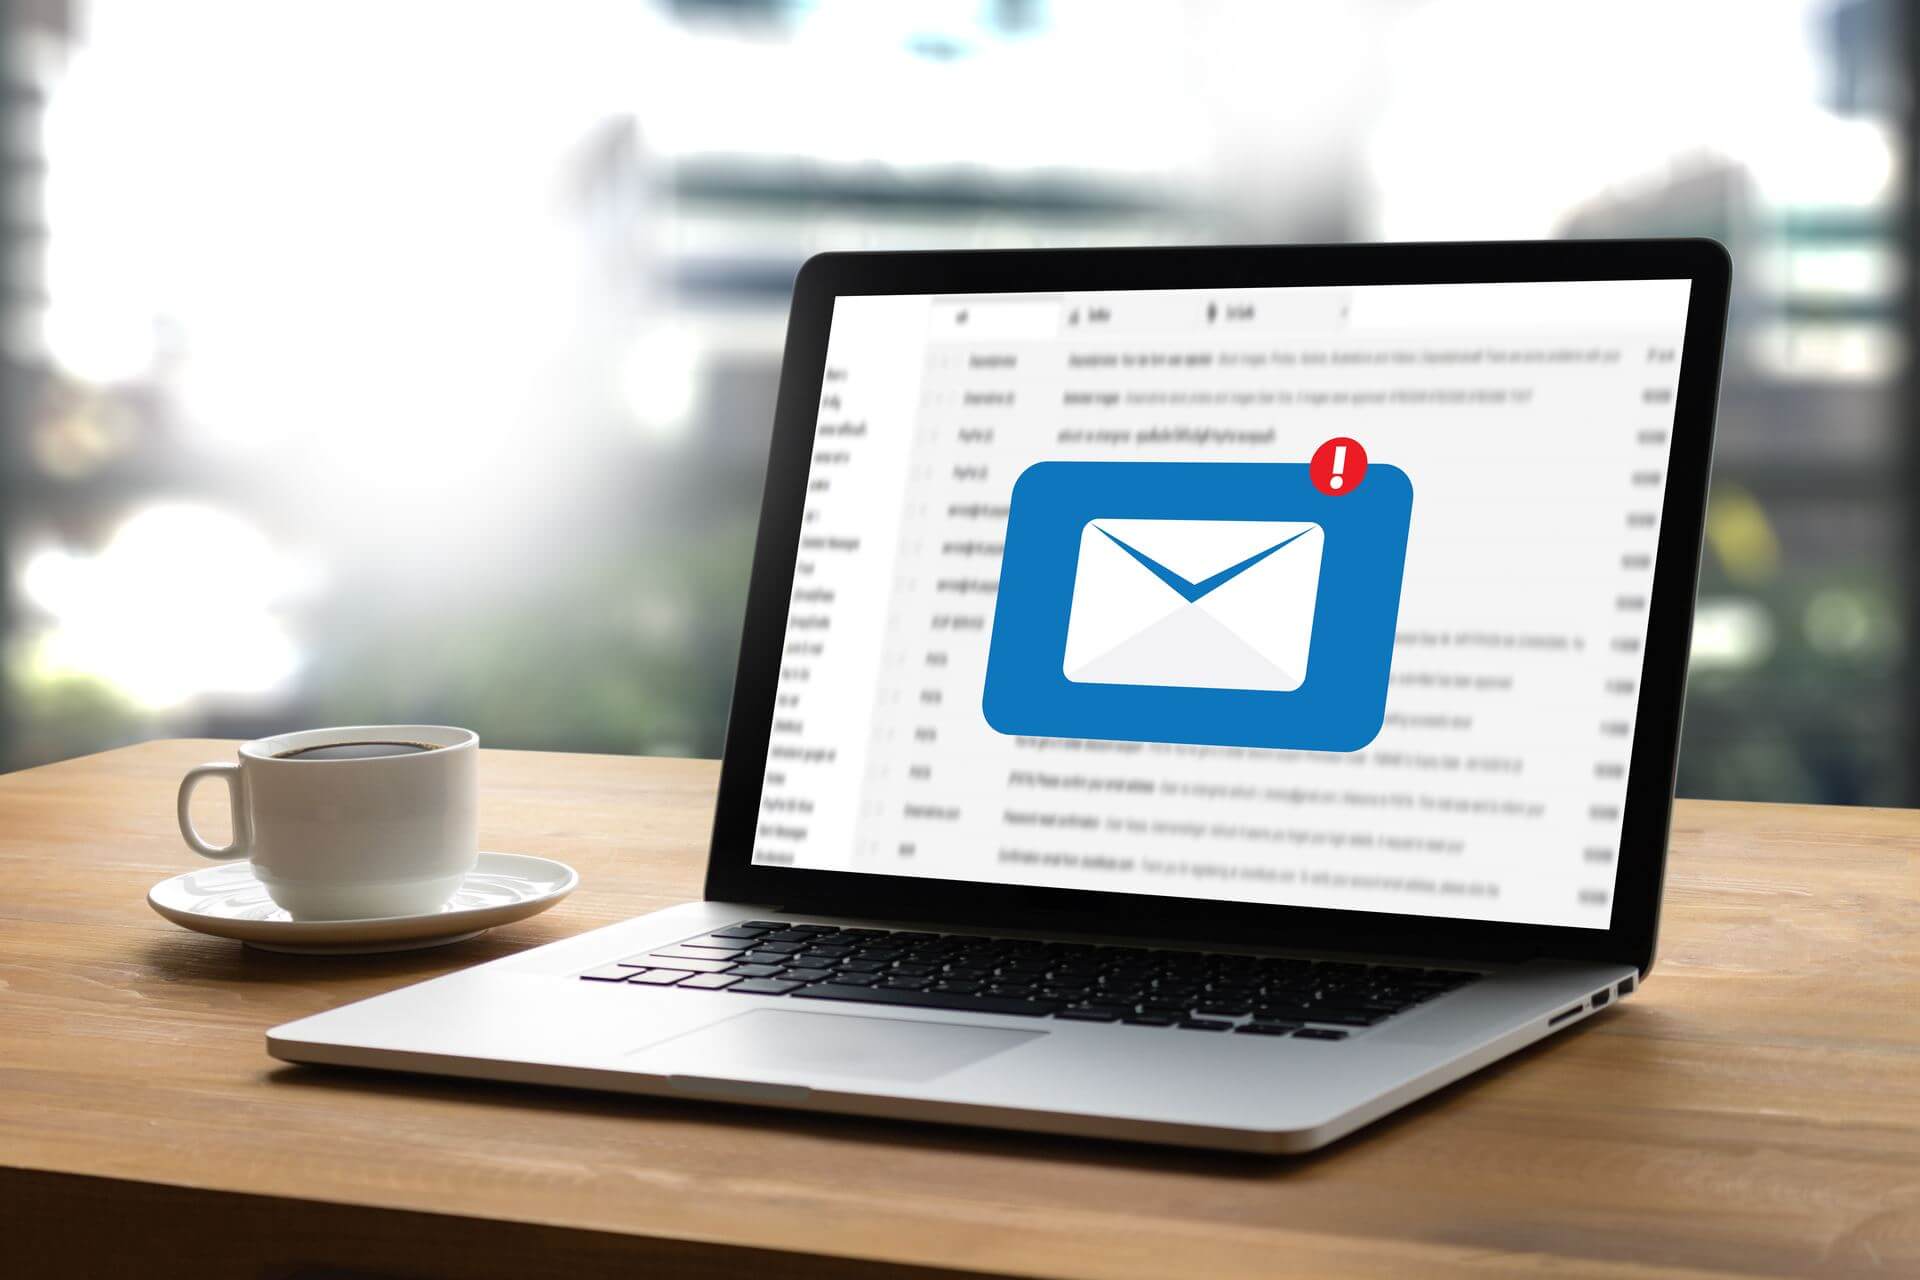 Windows 10 Mail won’t print emails